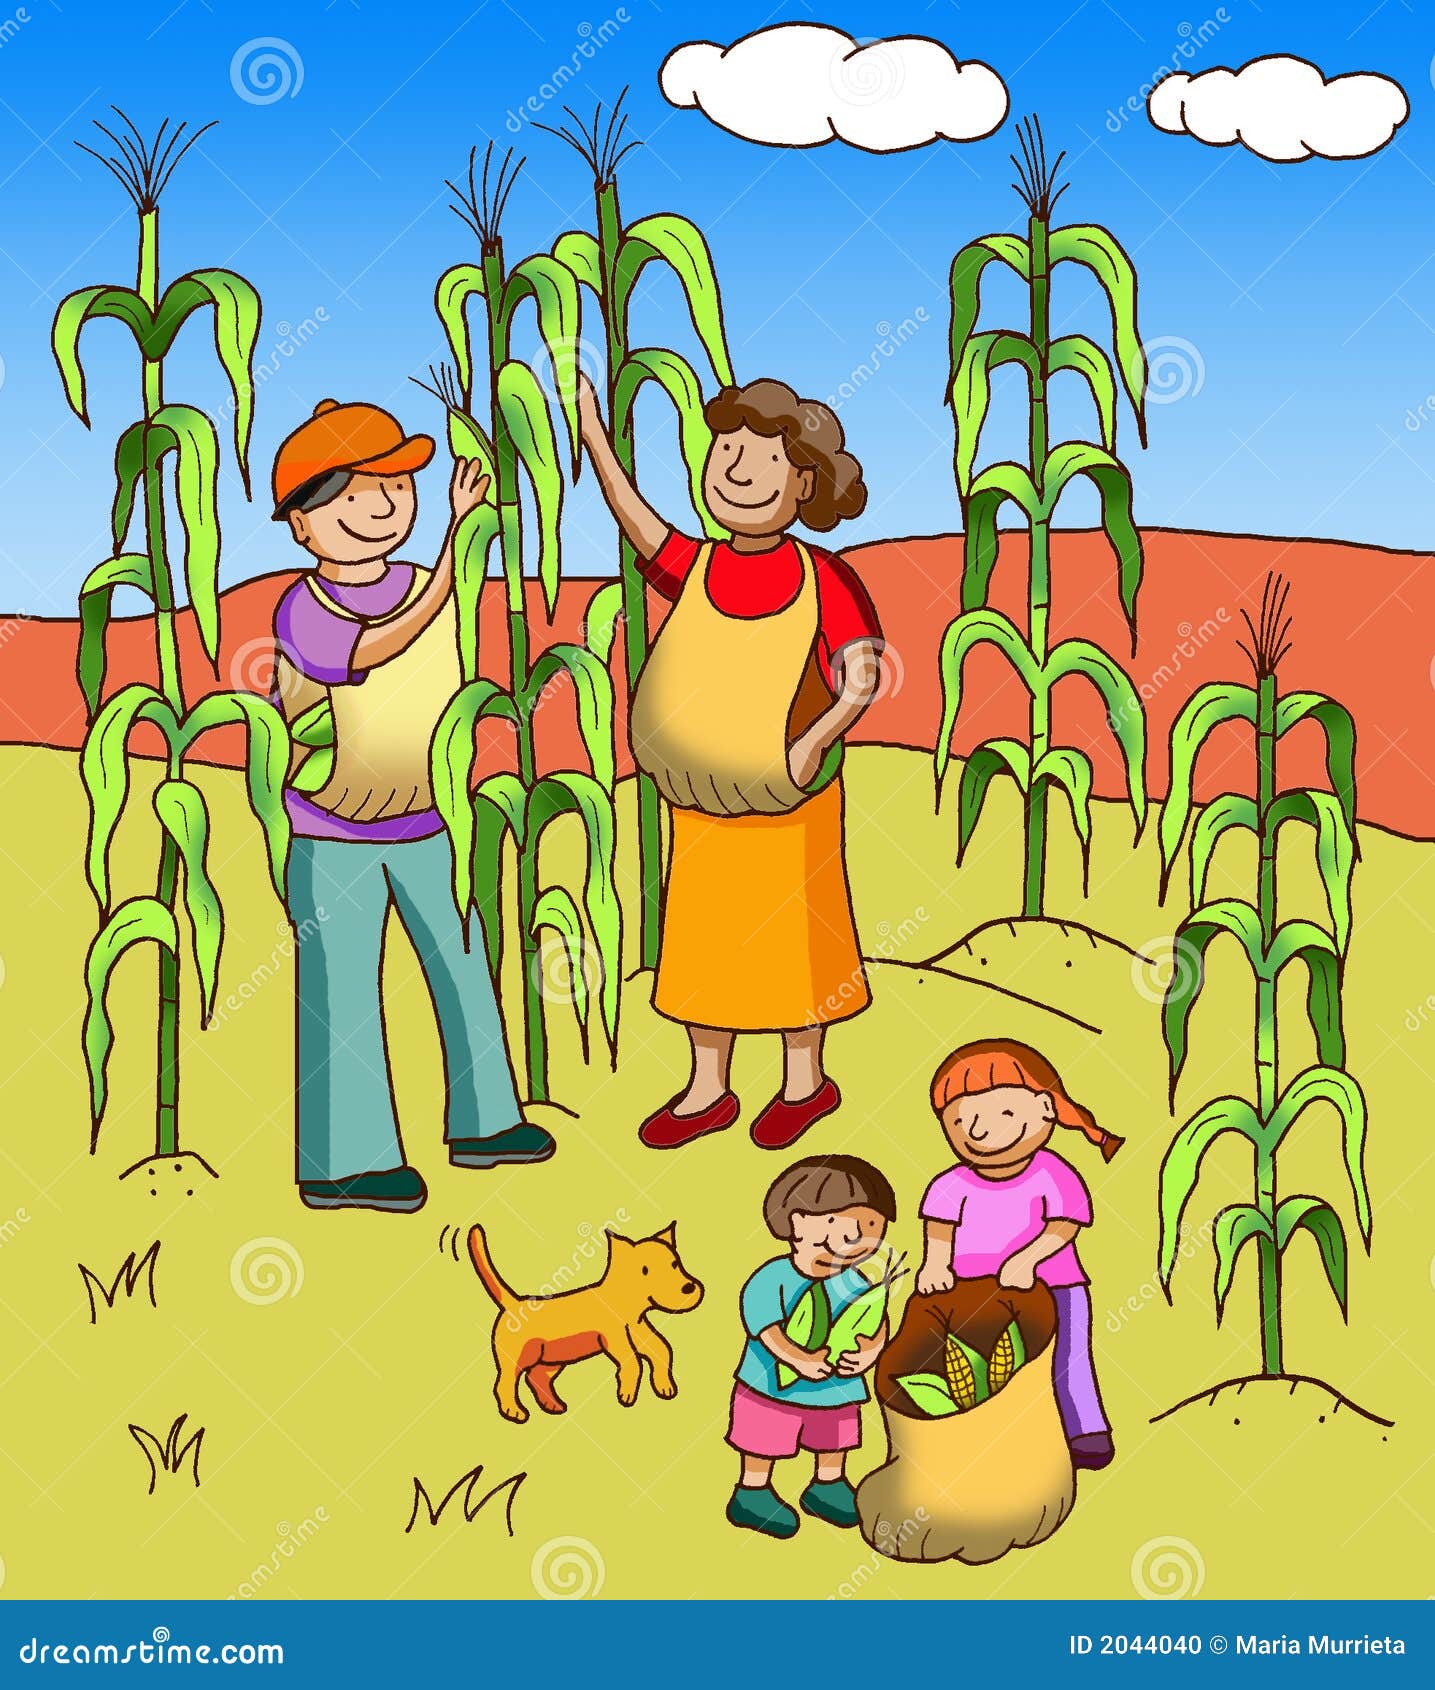 collecting corn